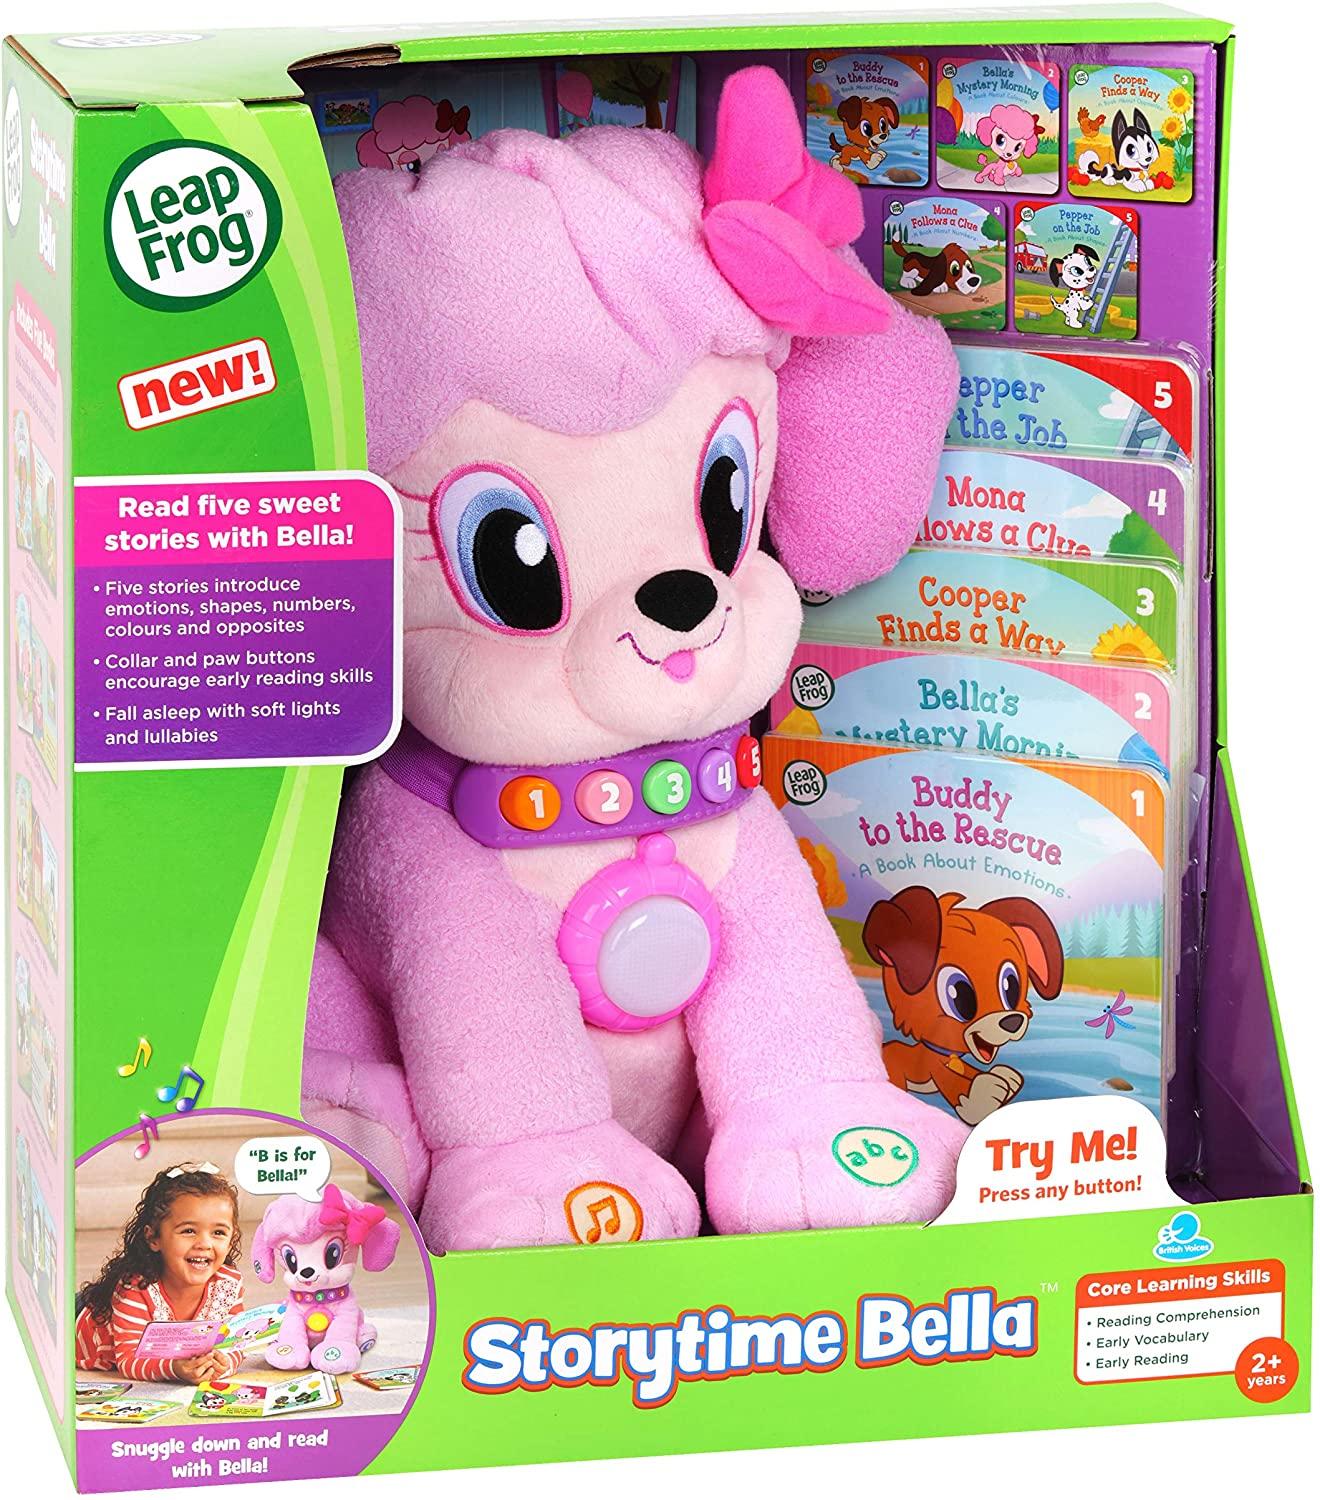 Leapfrog Storytime Bella Toymaster Ballina